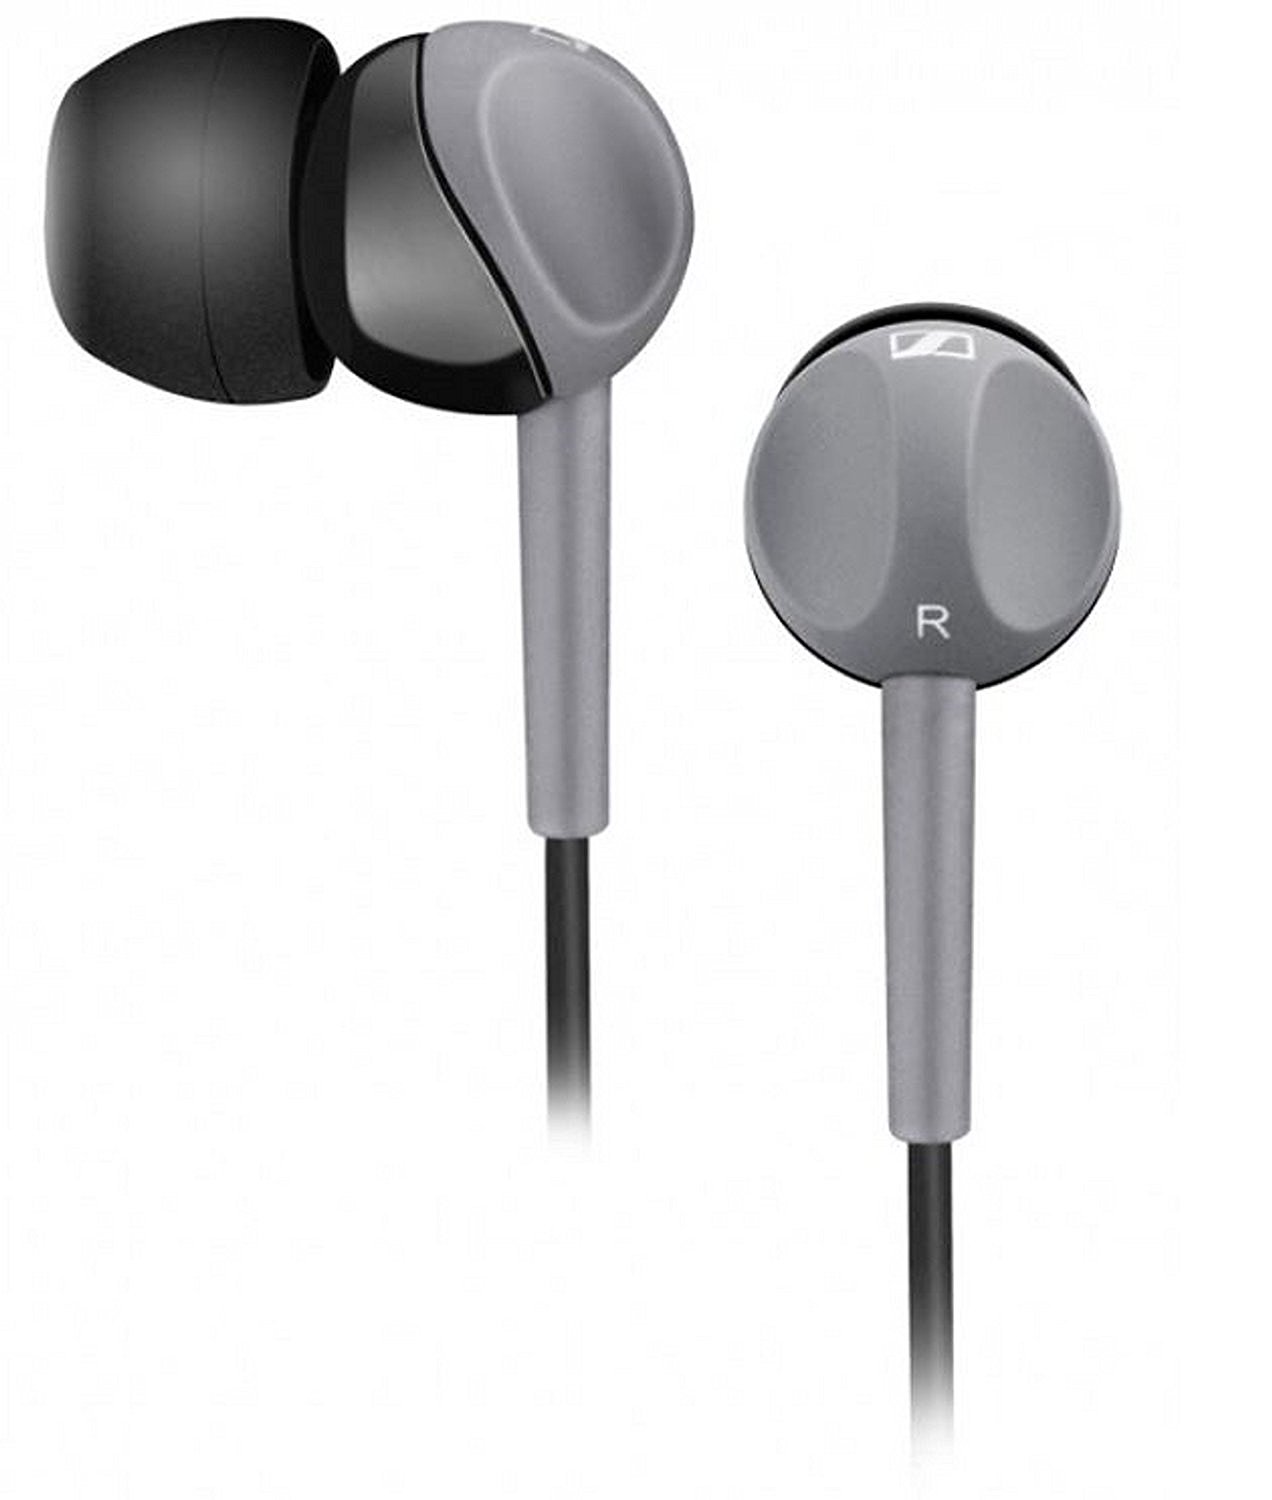 Sennheiser CX 180 Street II In-Ear Headphone (Black), without Mic. Price in India